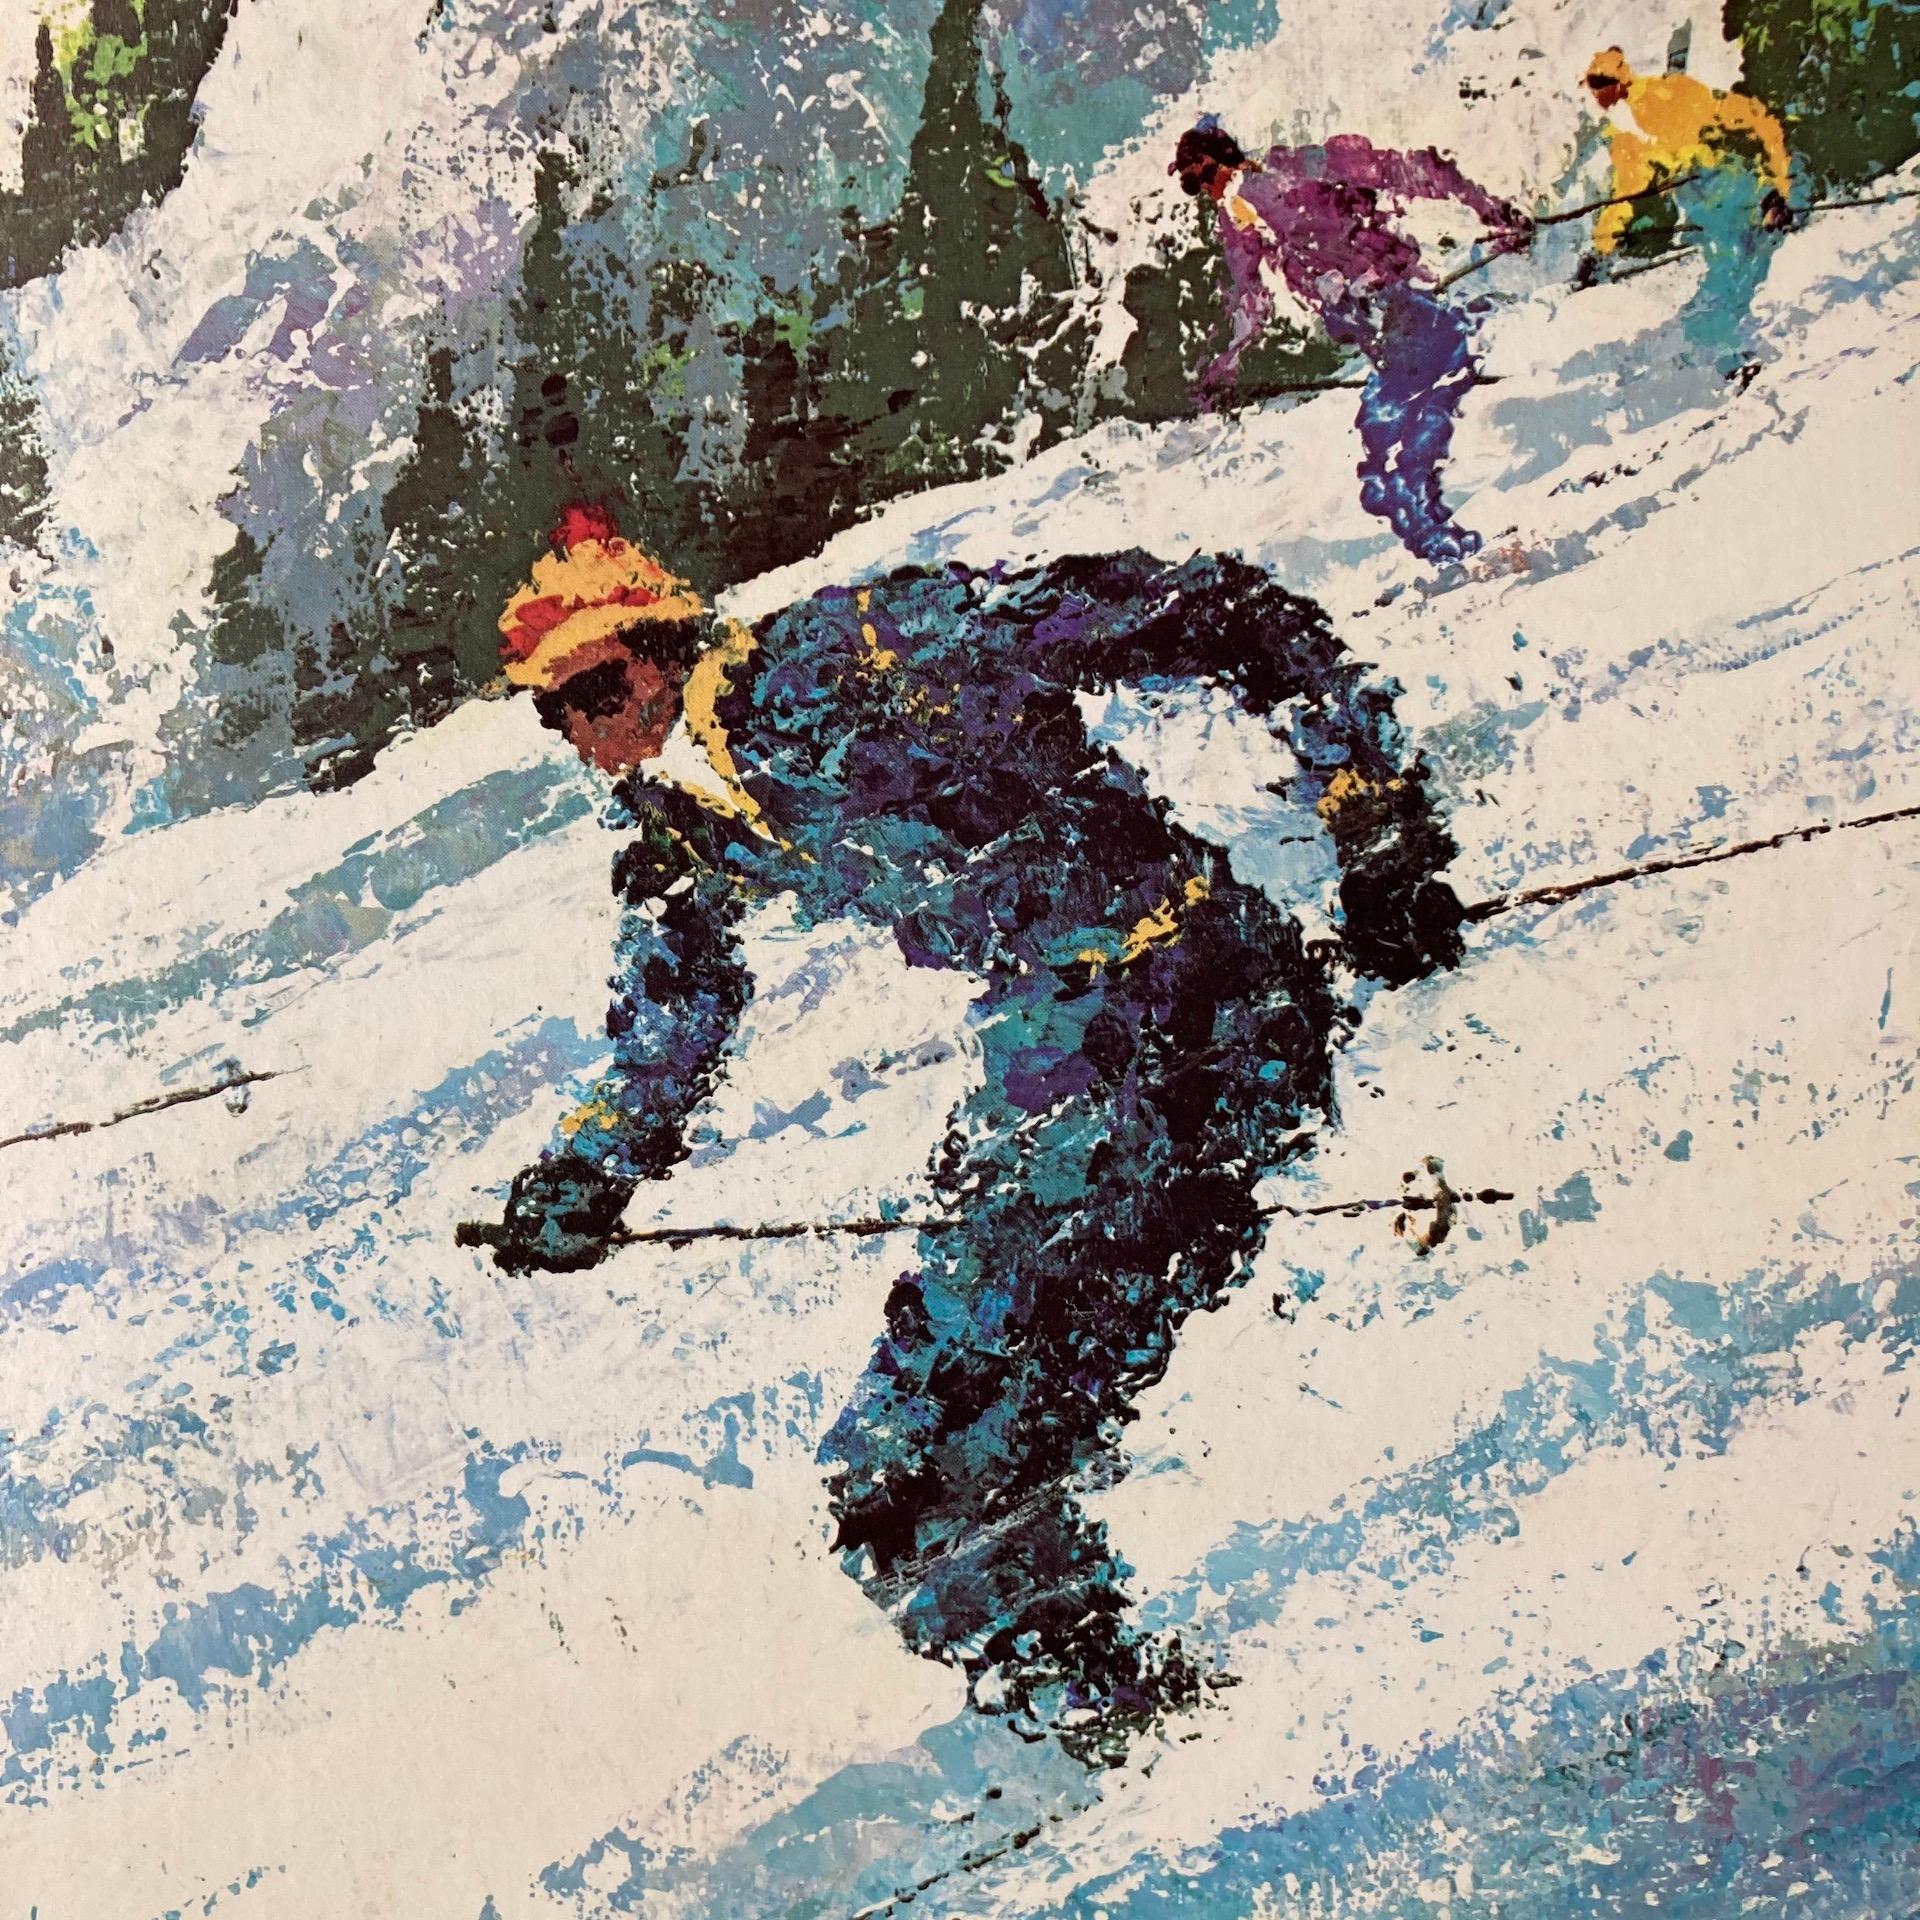 American Original Vintage Travel Delta Air Lines Ski Poster, Jack Laycox